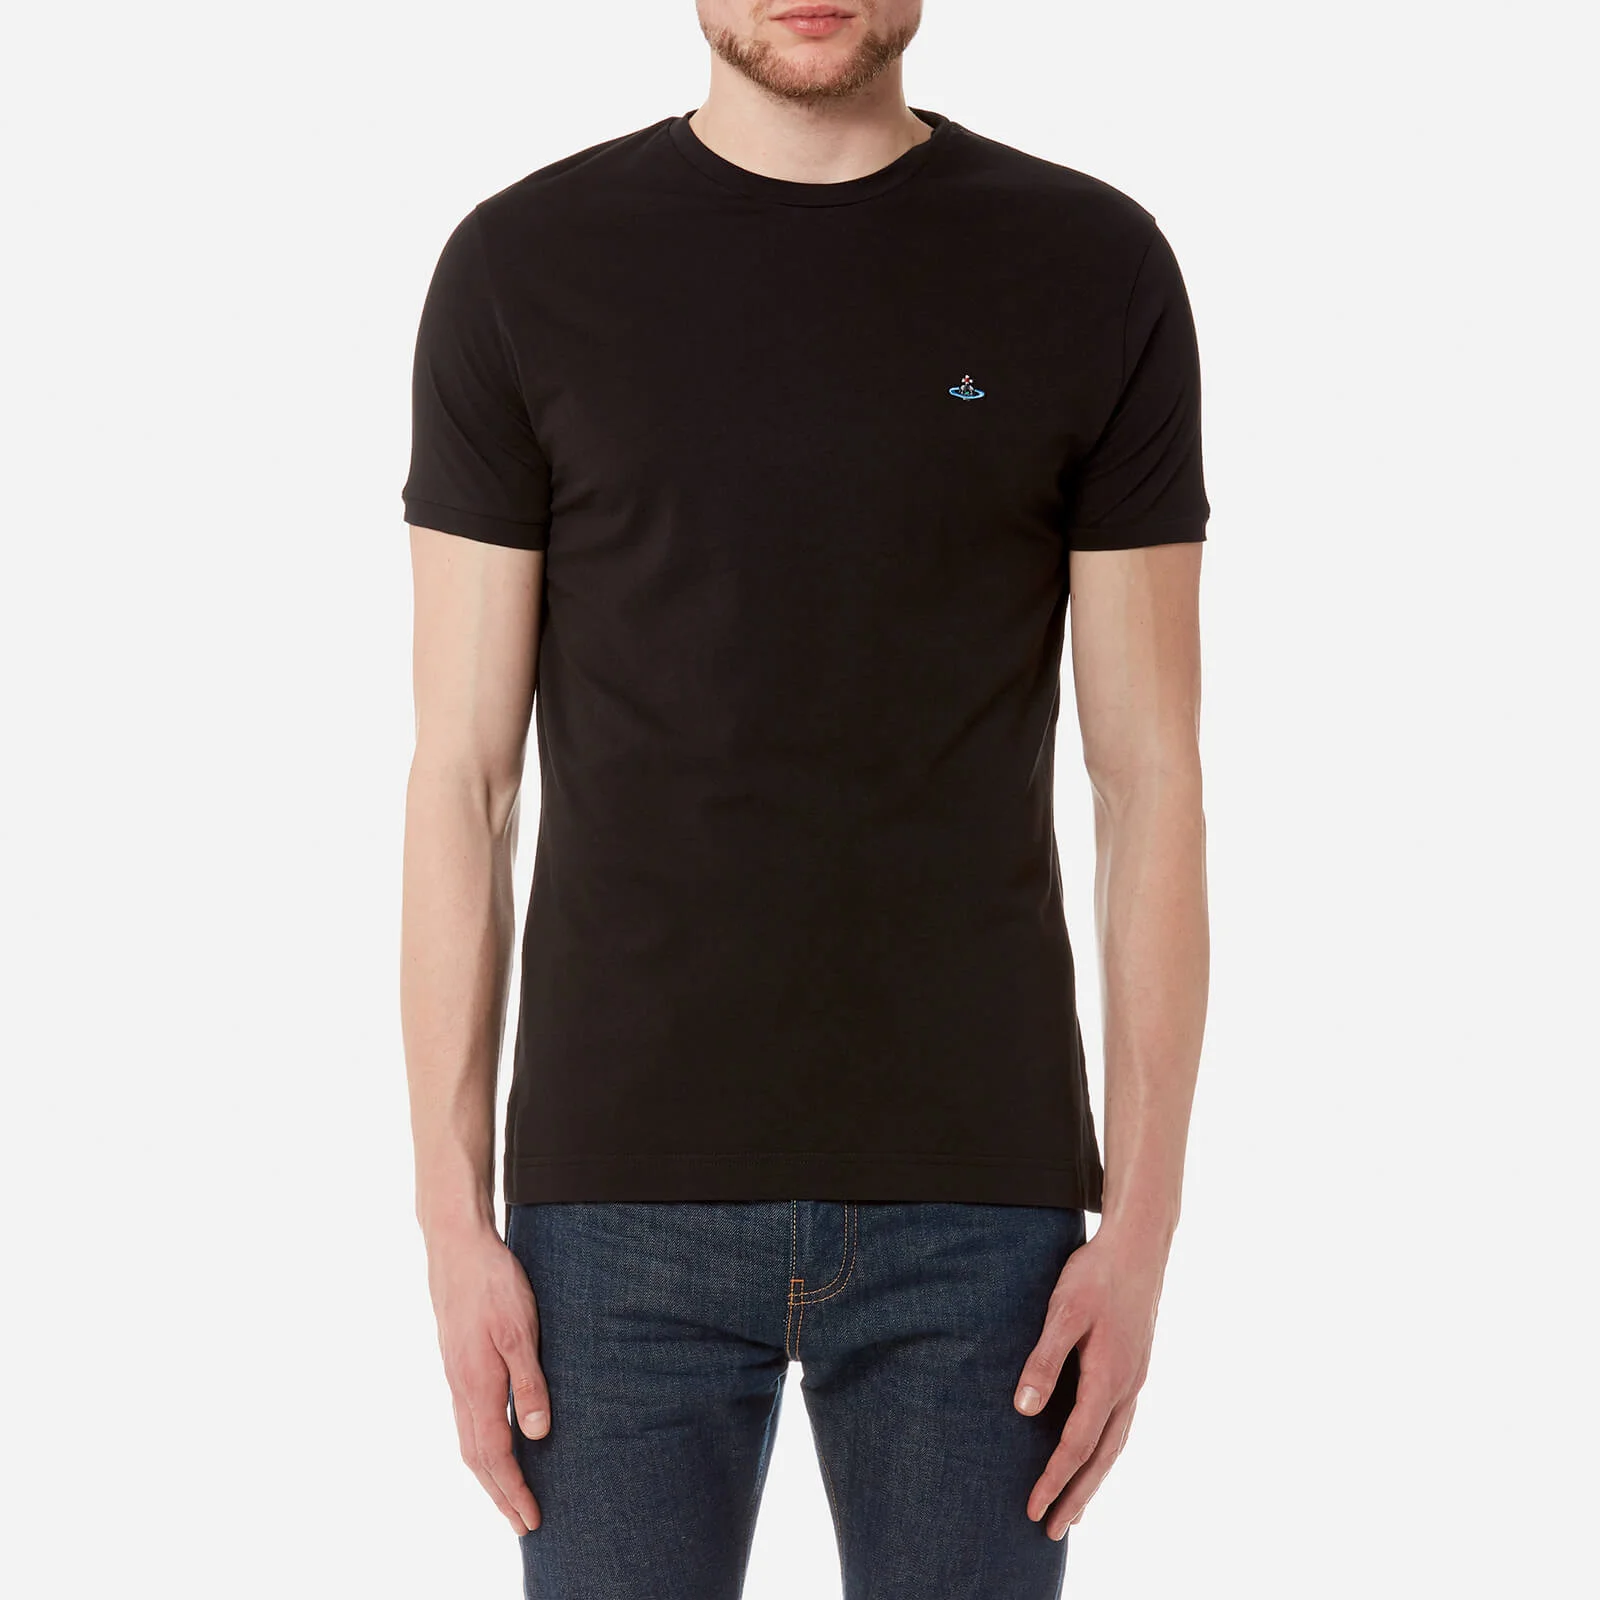 Vivienne Westwood Men's Peru T-Shirt - Black Image 1